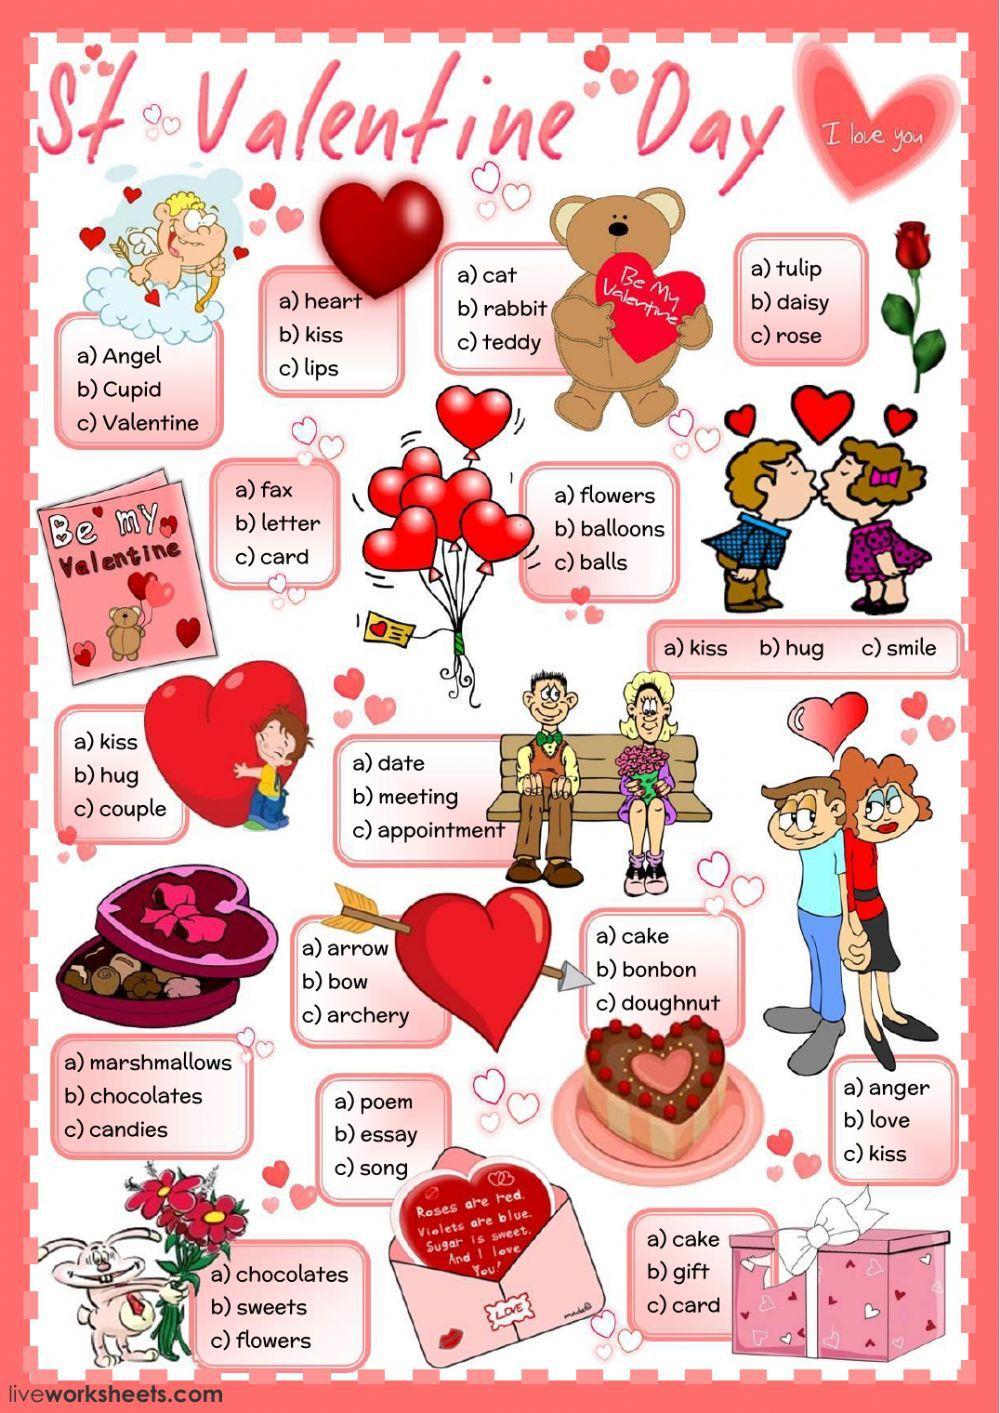 St Valentine's Day - multiple choice worksheet | Live Worksheets